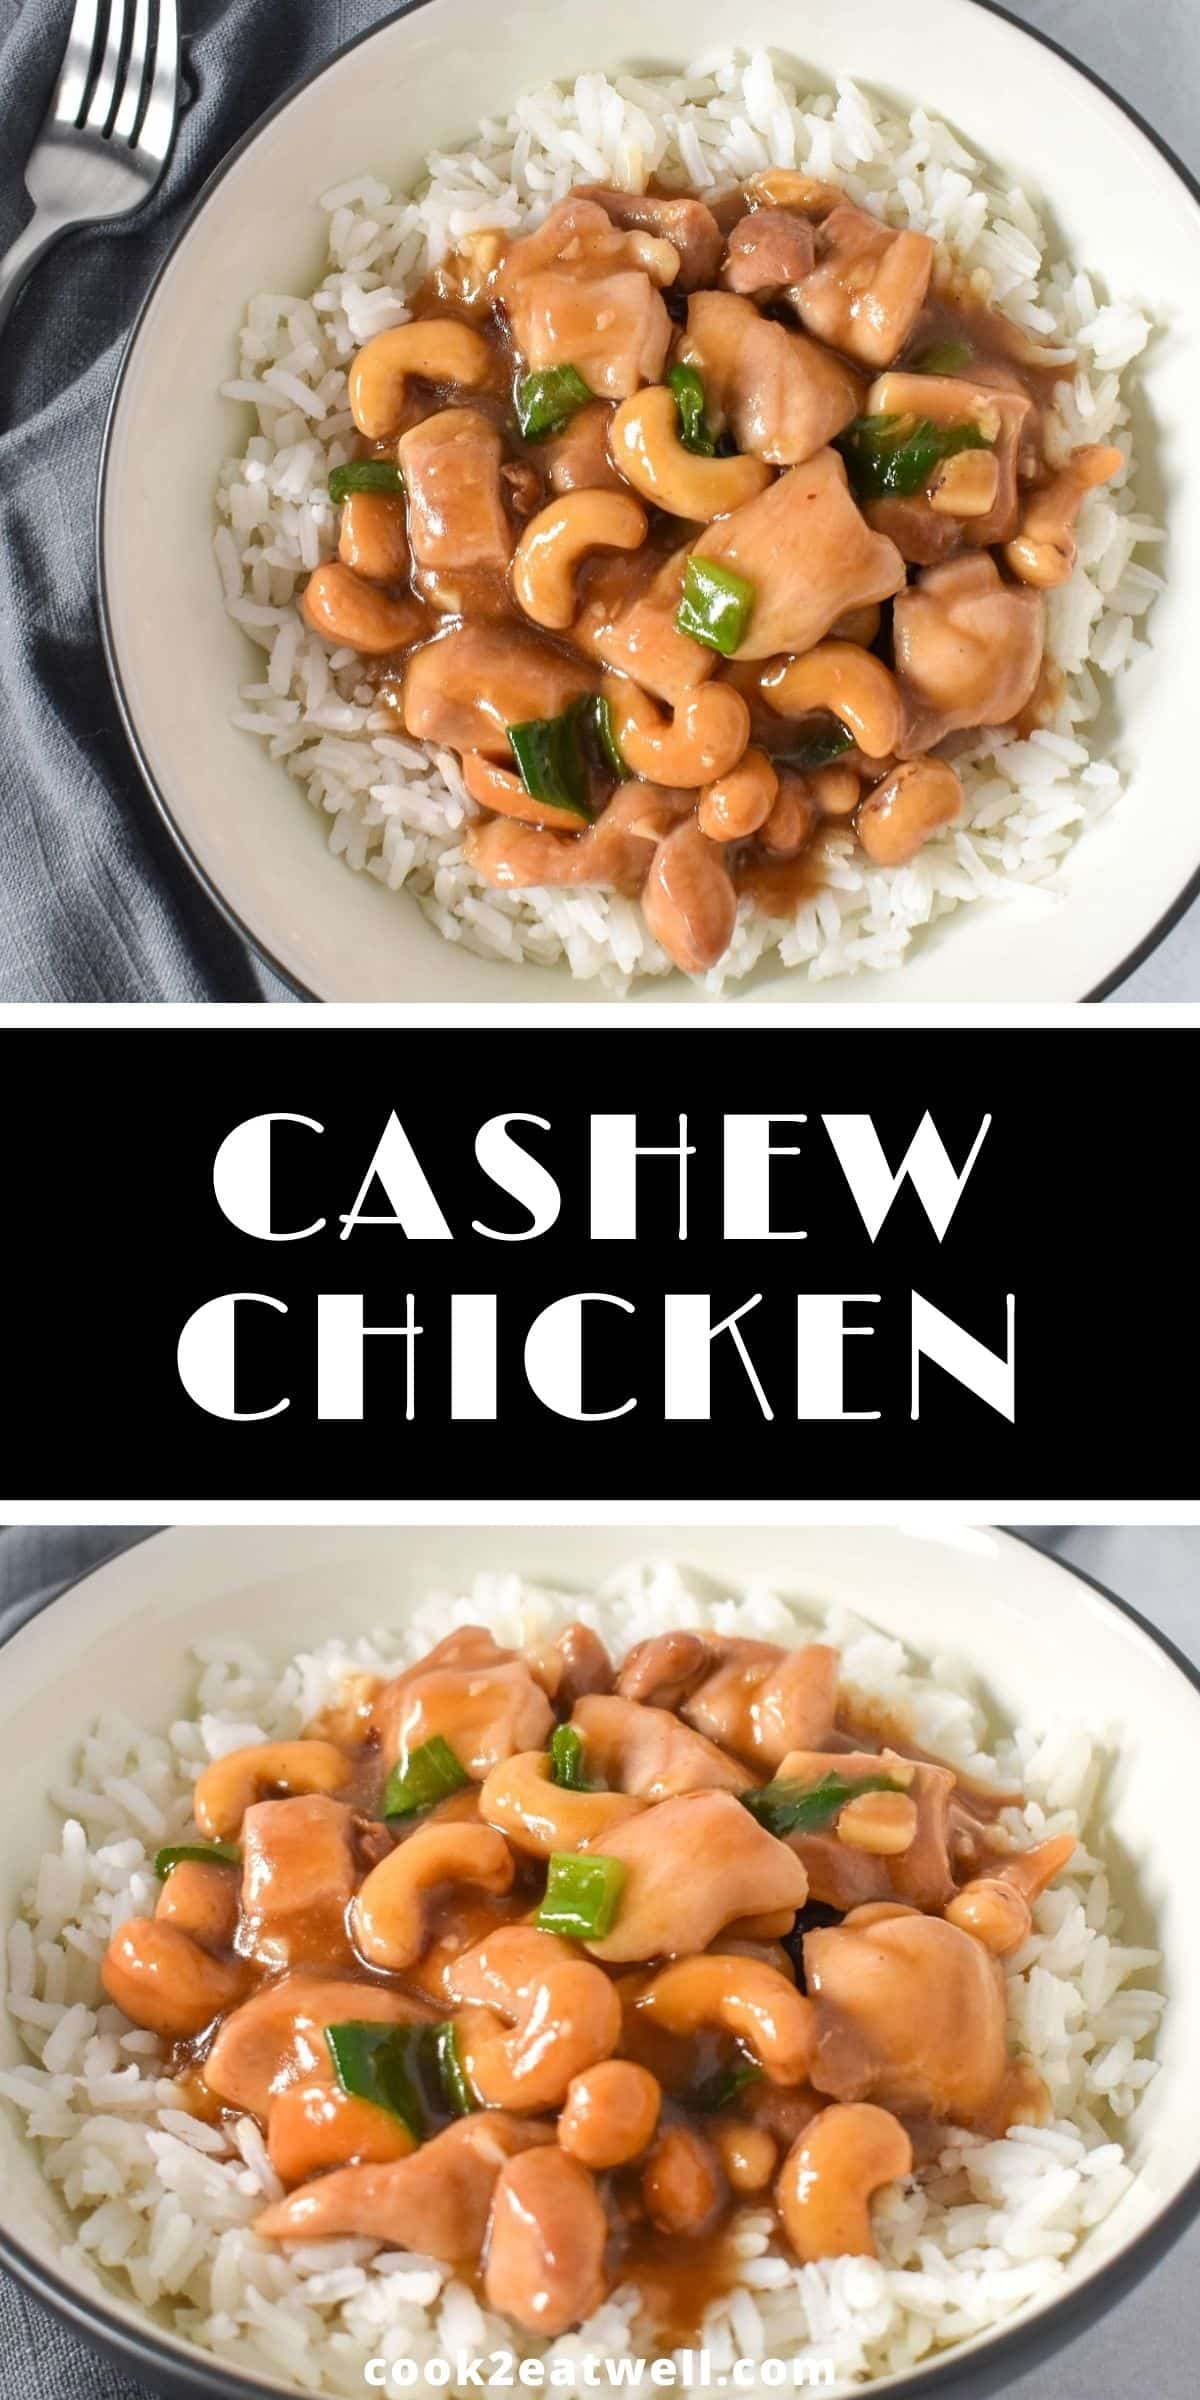 Cashew Chicken - Cook2eatwell